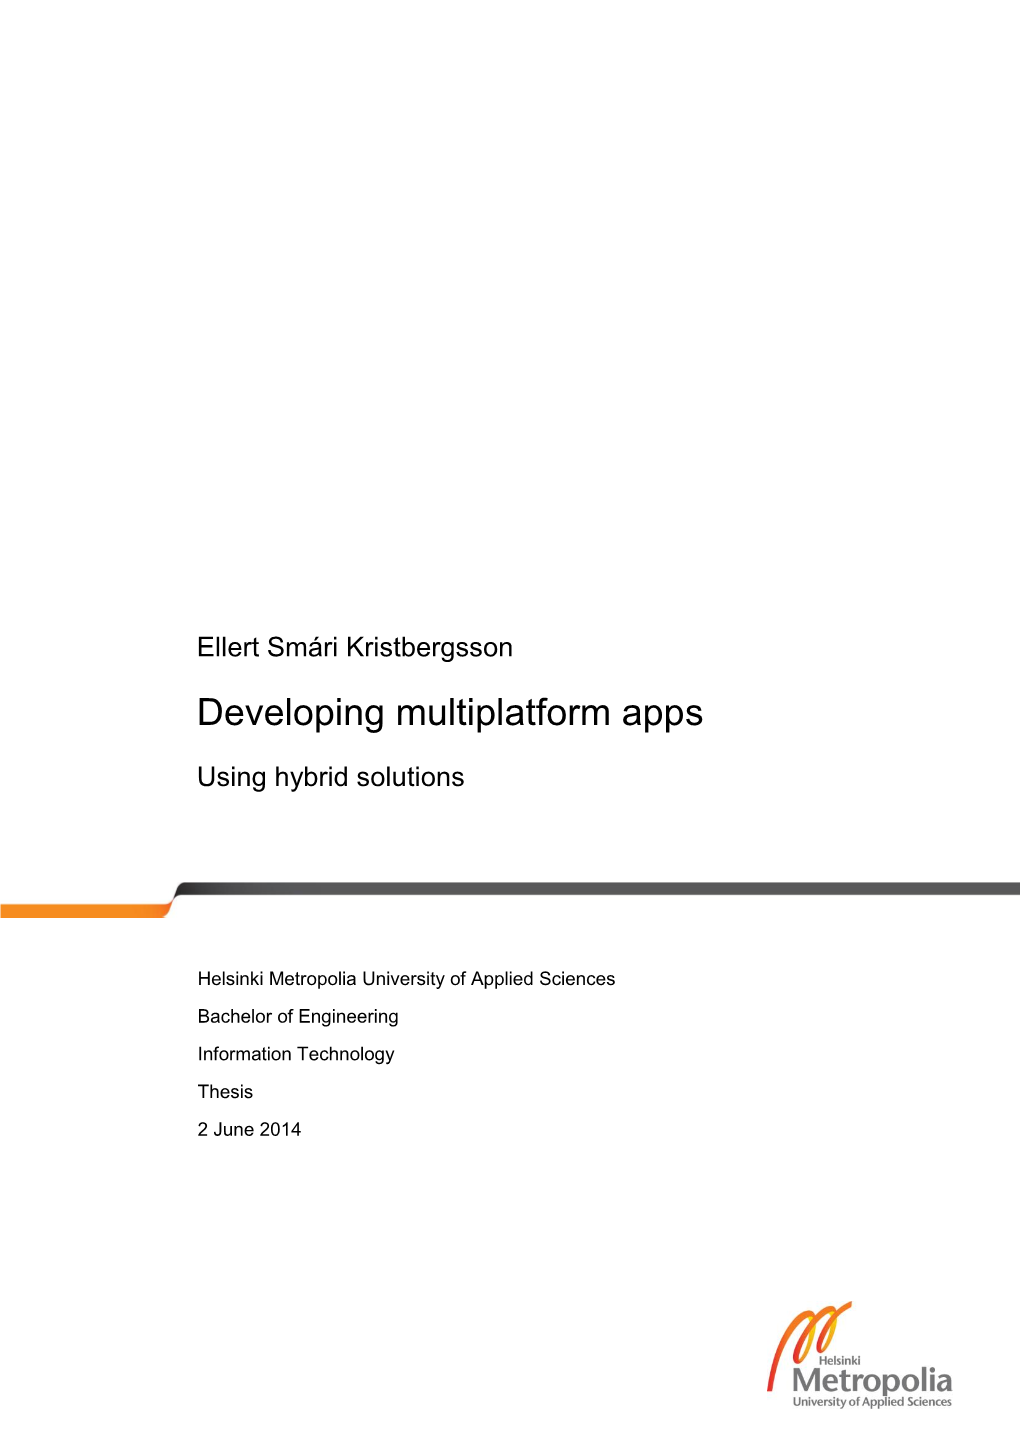 Developing Multiplatform Apps